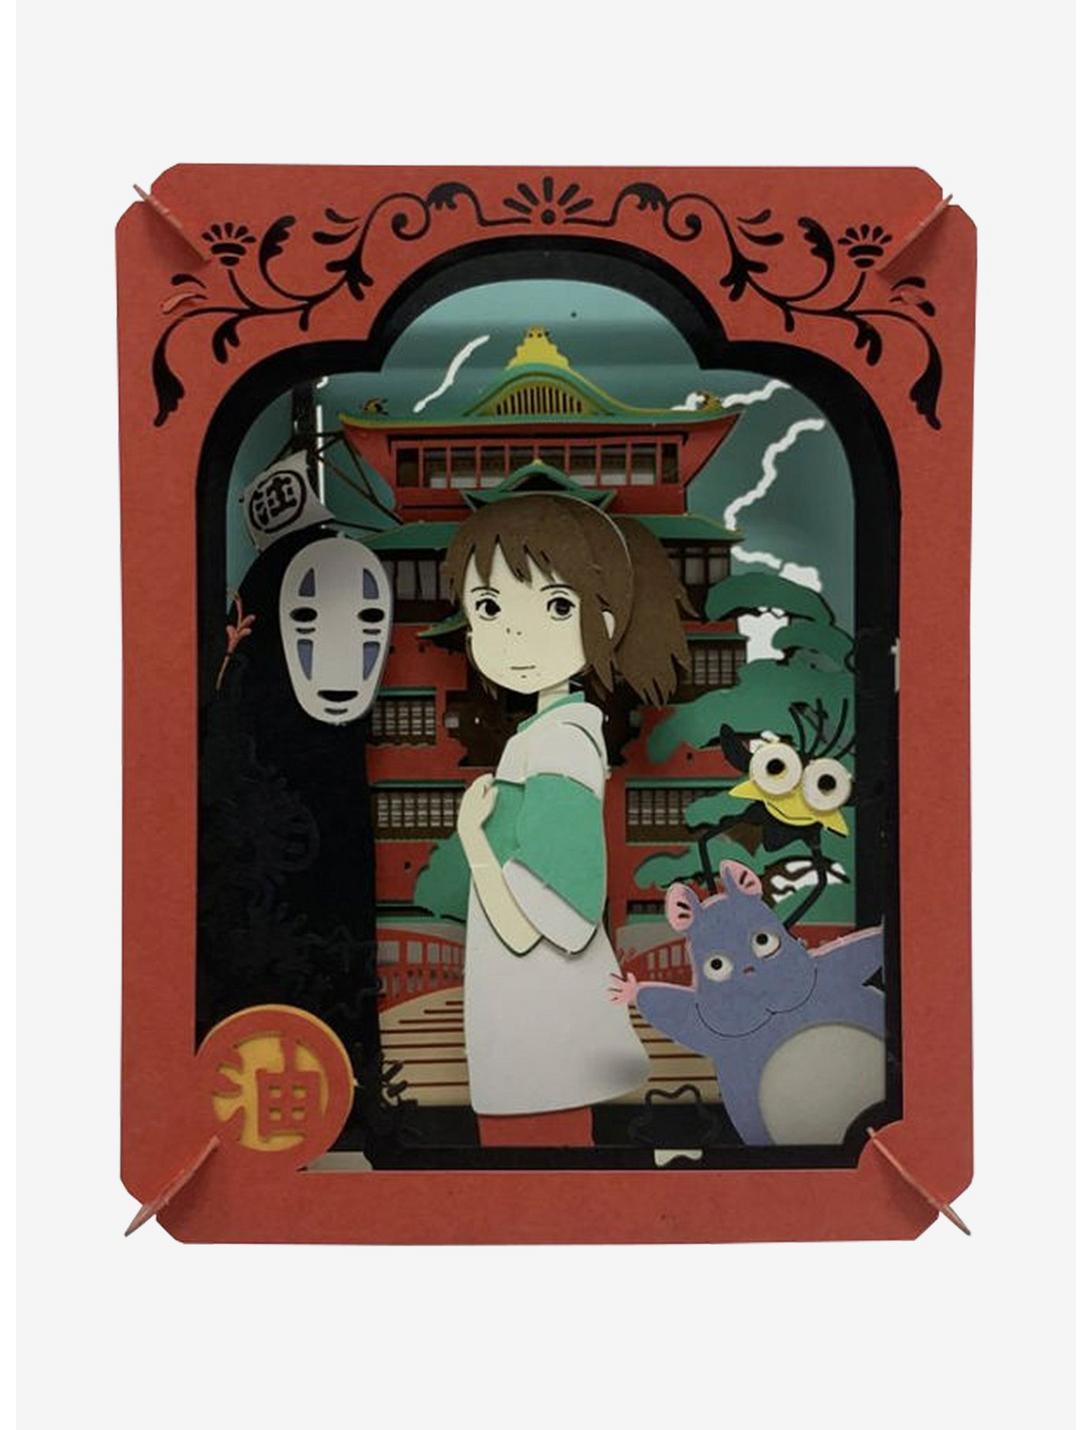 Studio Ghibli Spirited Away Paper Theater